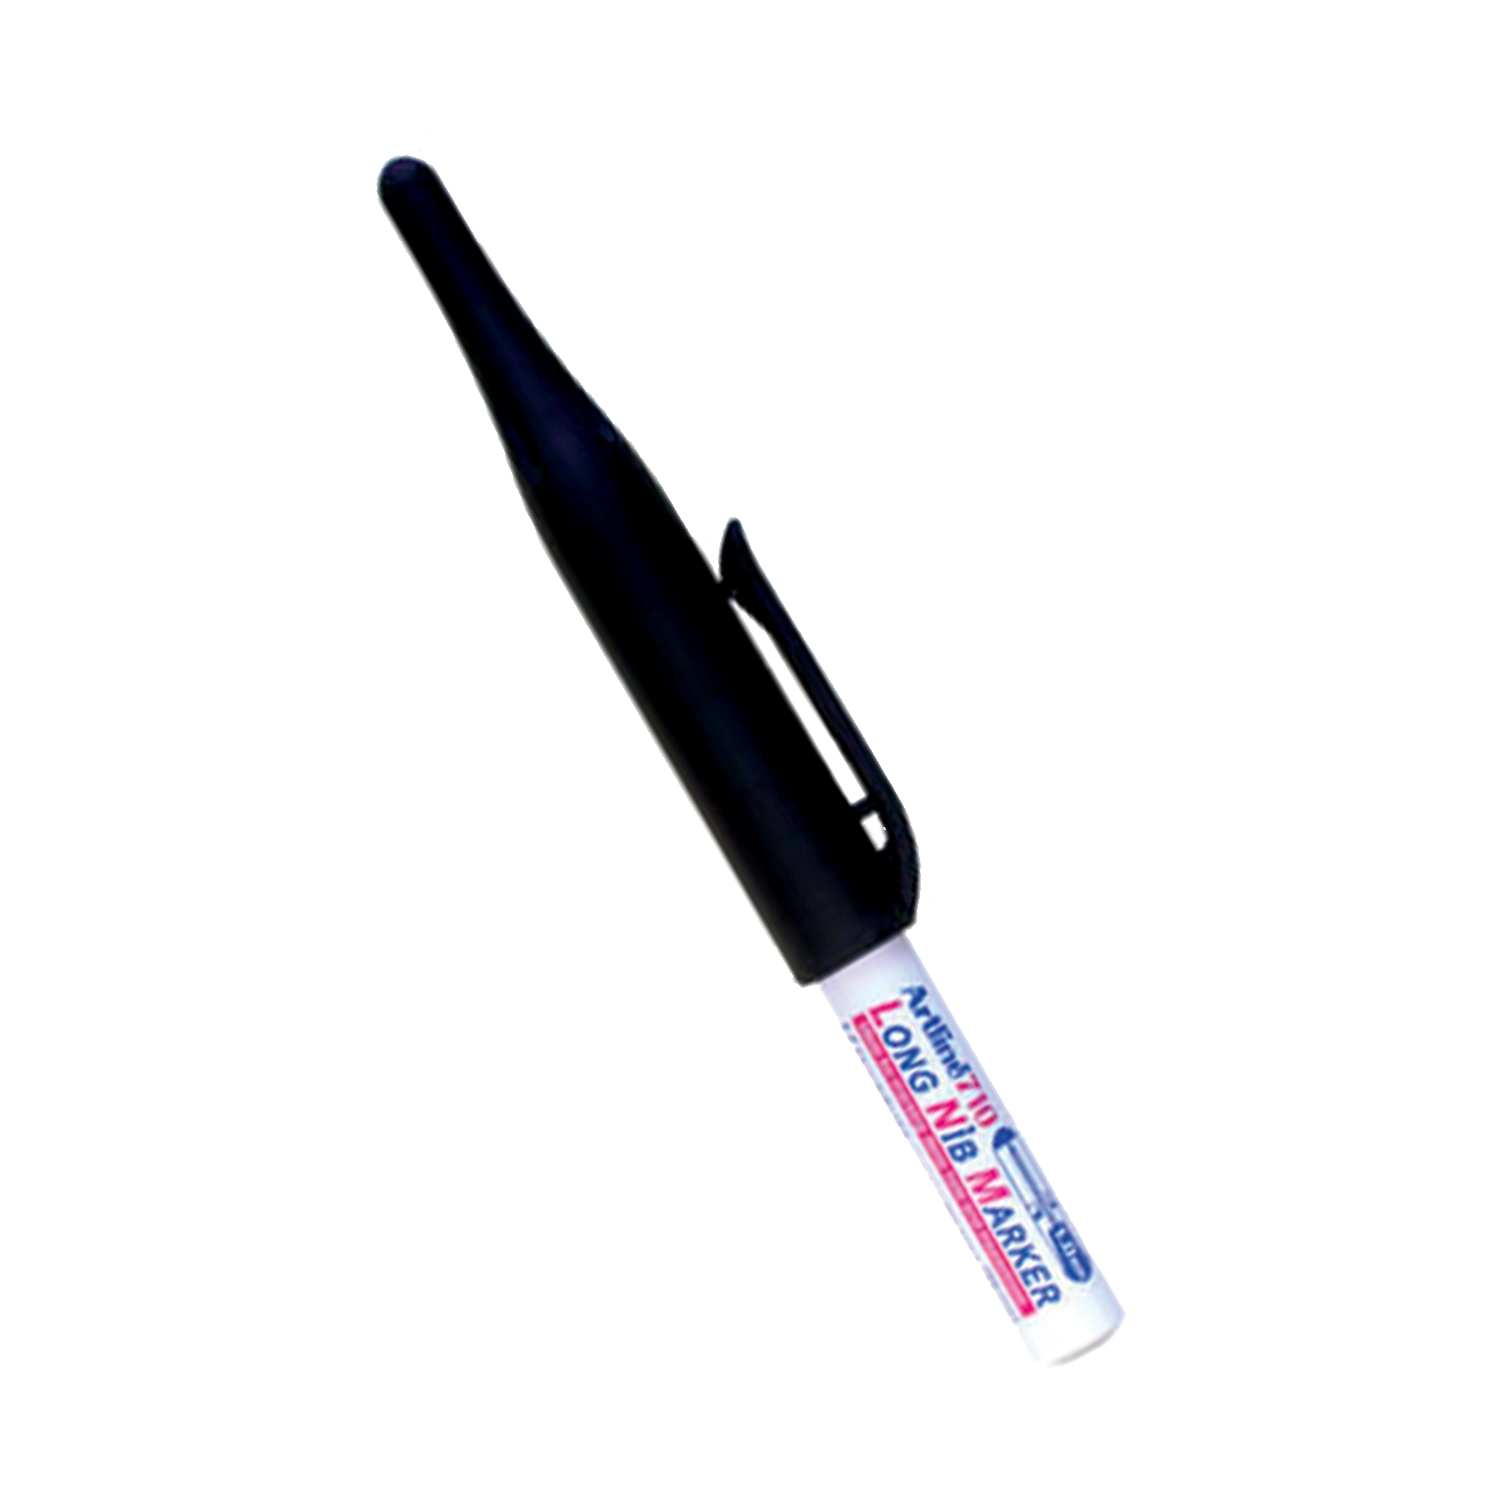 FACOM Long Nib Marker Zwart Ref AL0603203 EK-710: Zwarte marker met lange punt, EK-710 referentie.